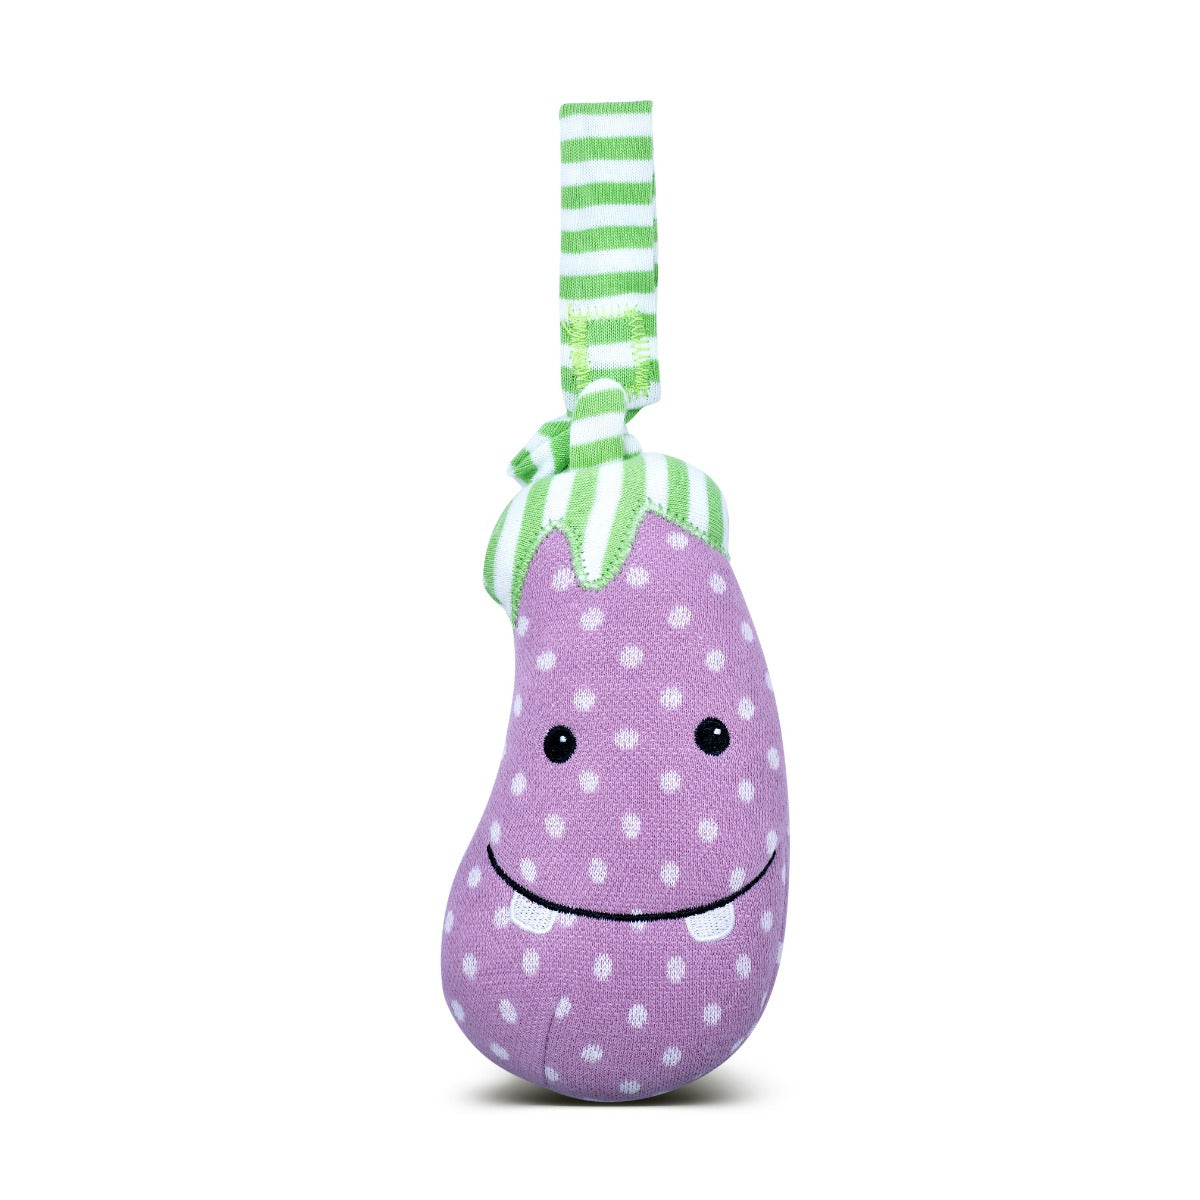 Eggplant Stroller Toy